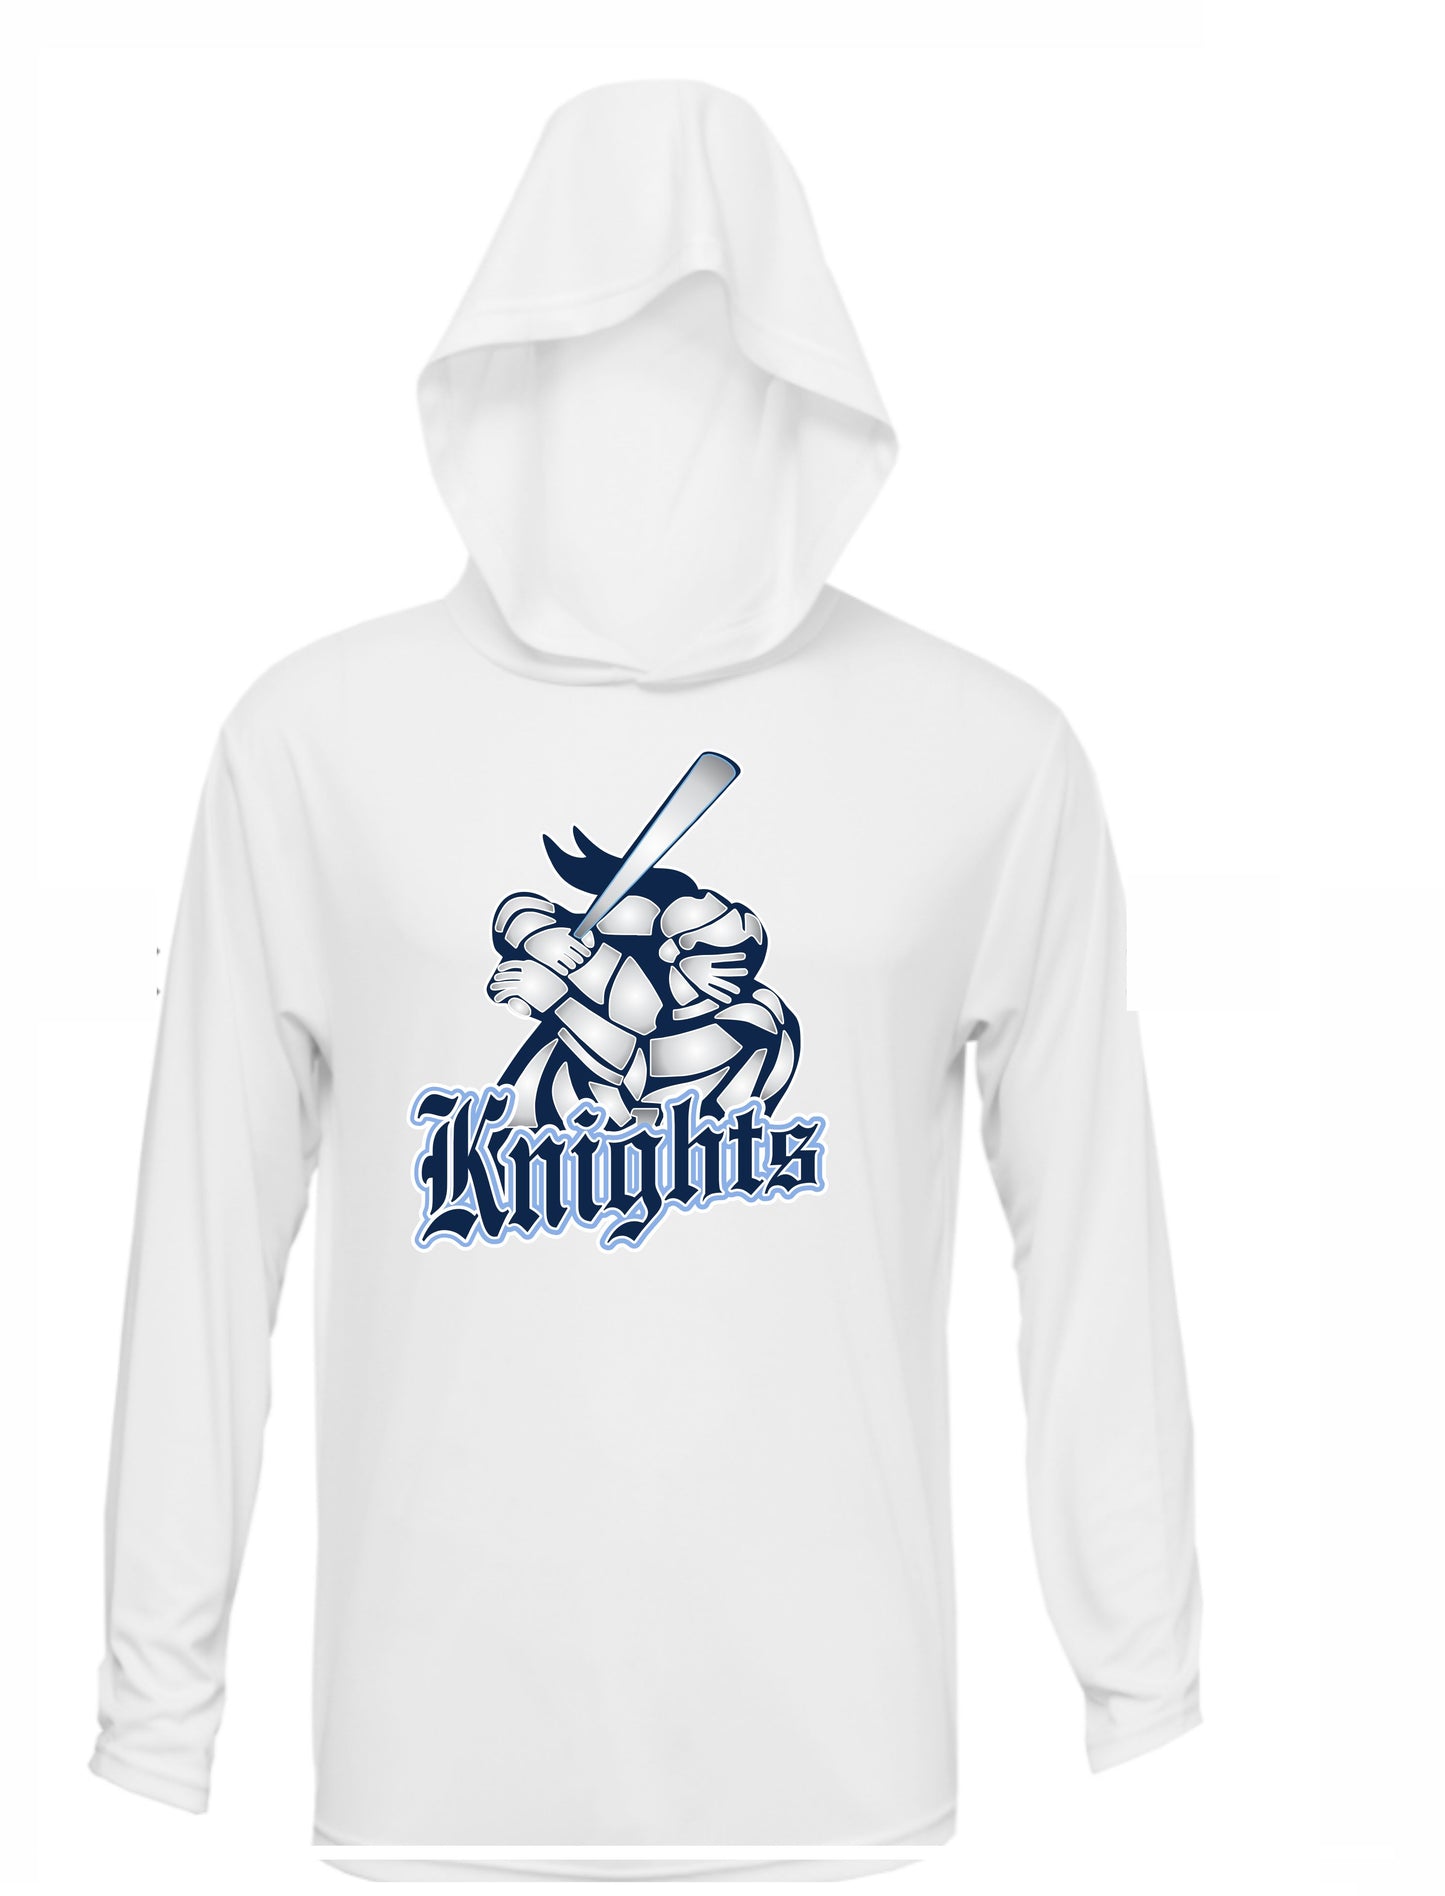 Knights Long-sleeve Dri-fit w/hood - Full logo